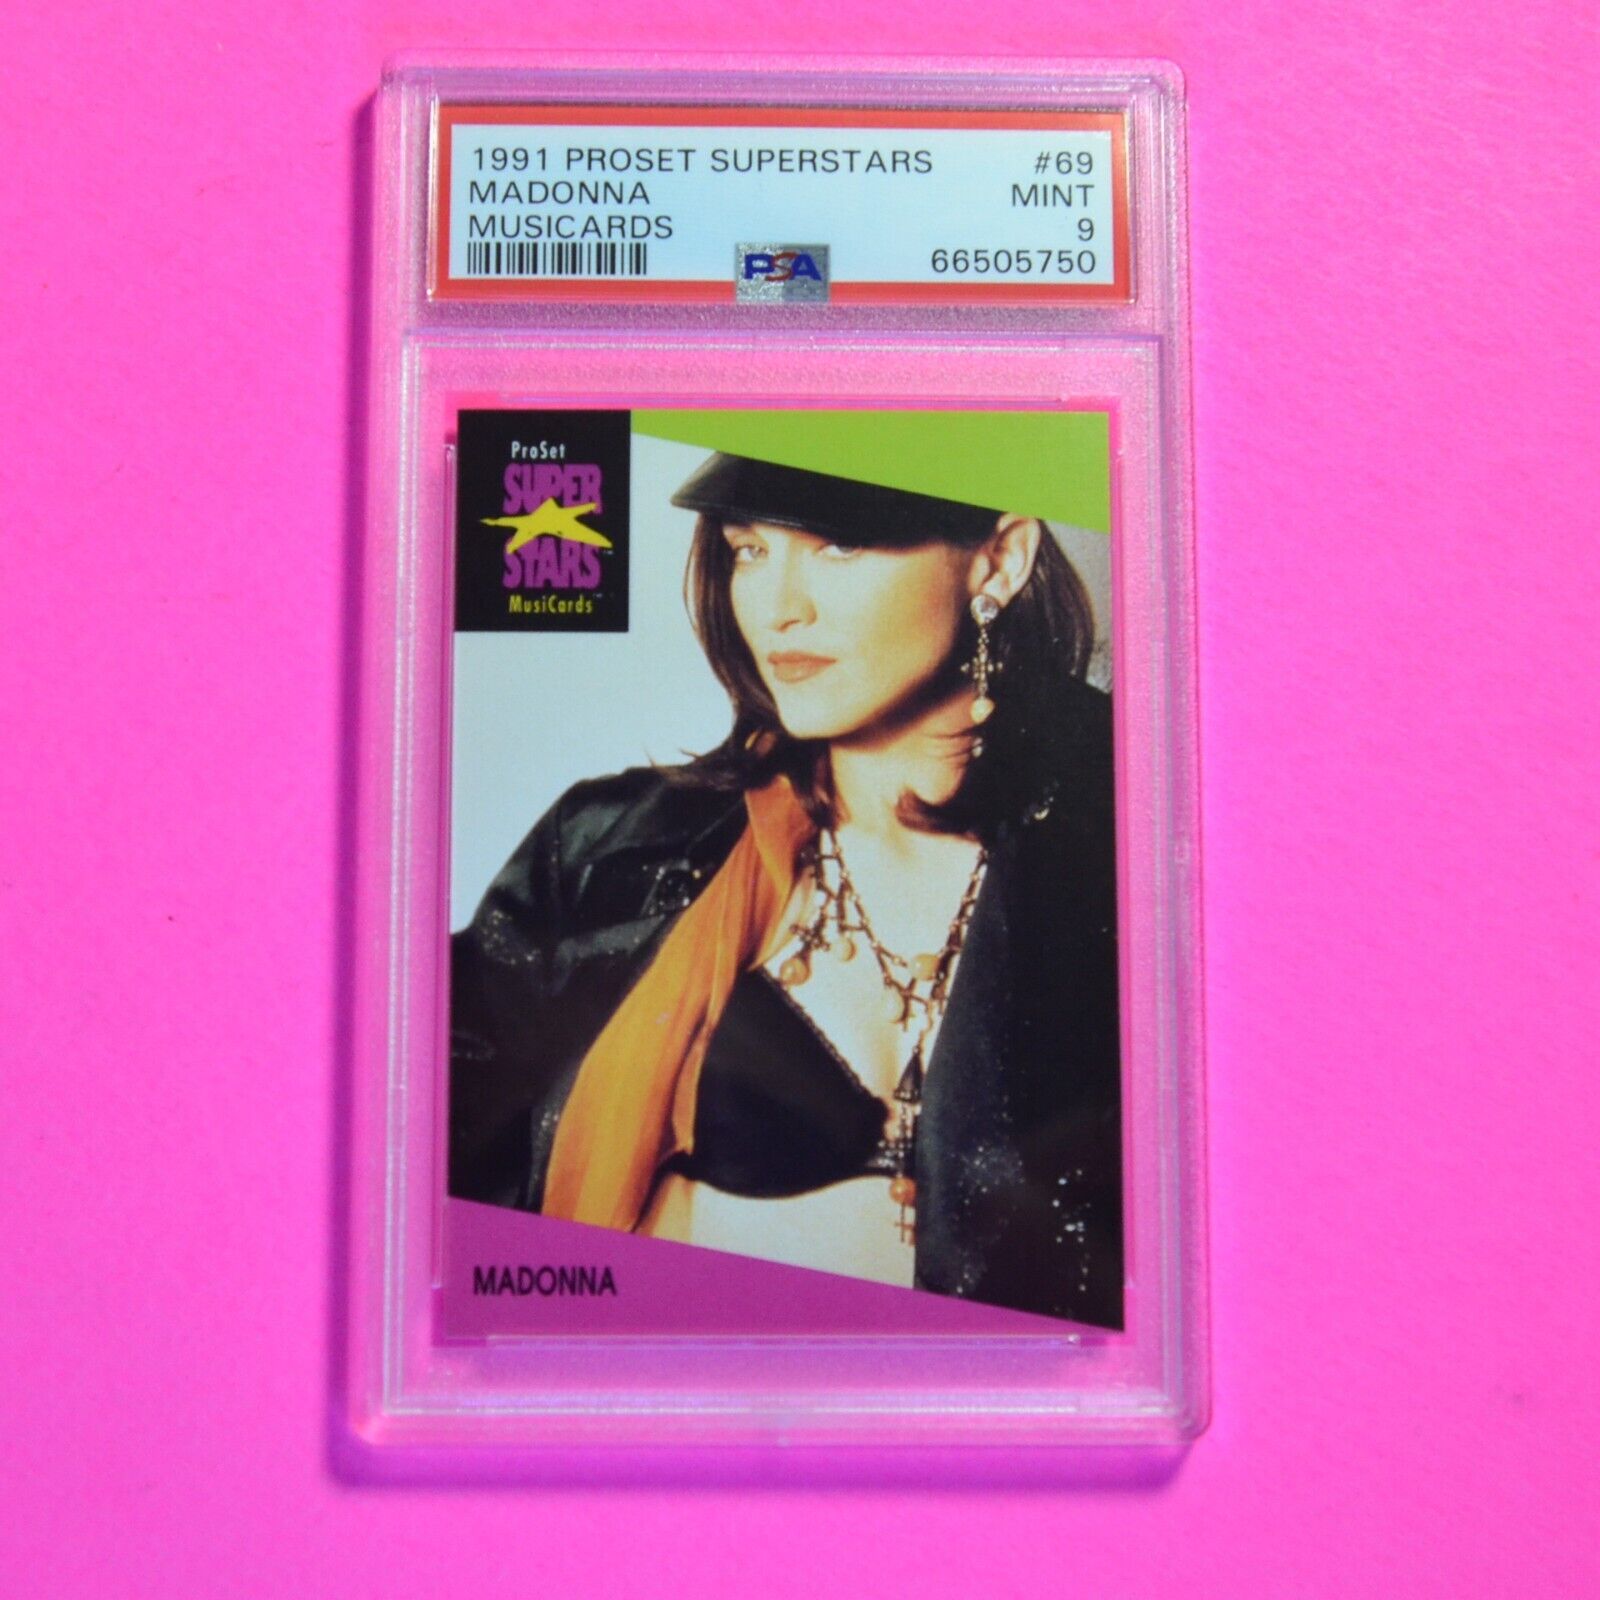 1991 Proset Superstars Musicards #69 Madonna Rookie - PSA 9 Mint (low pop)